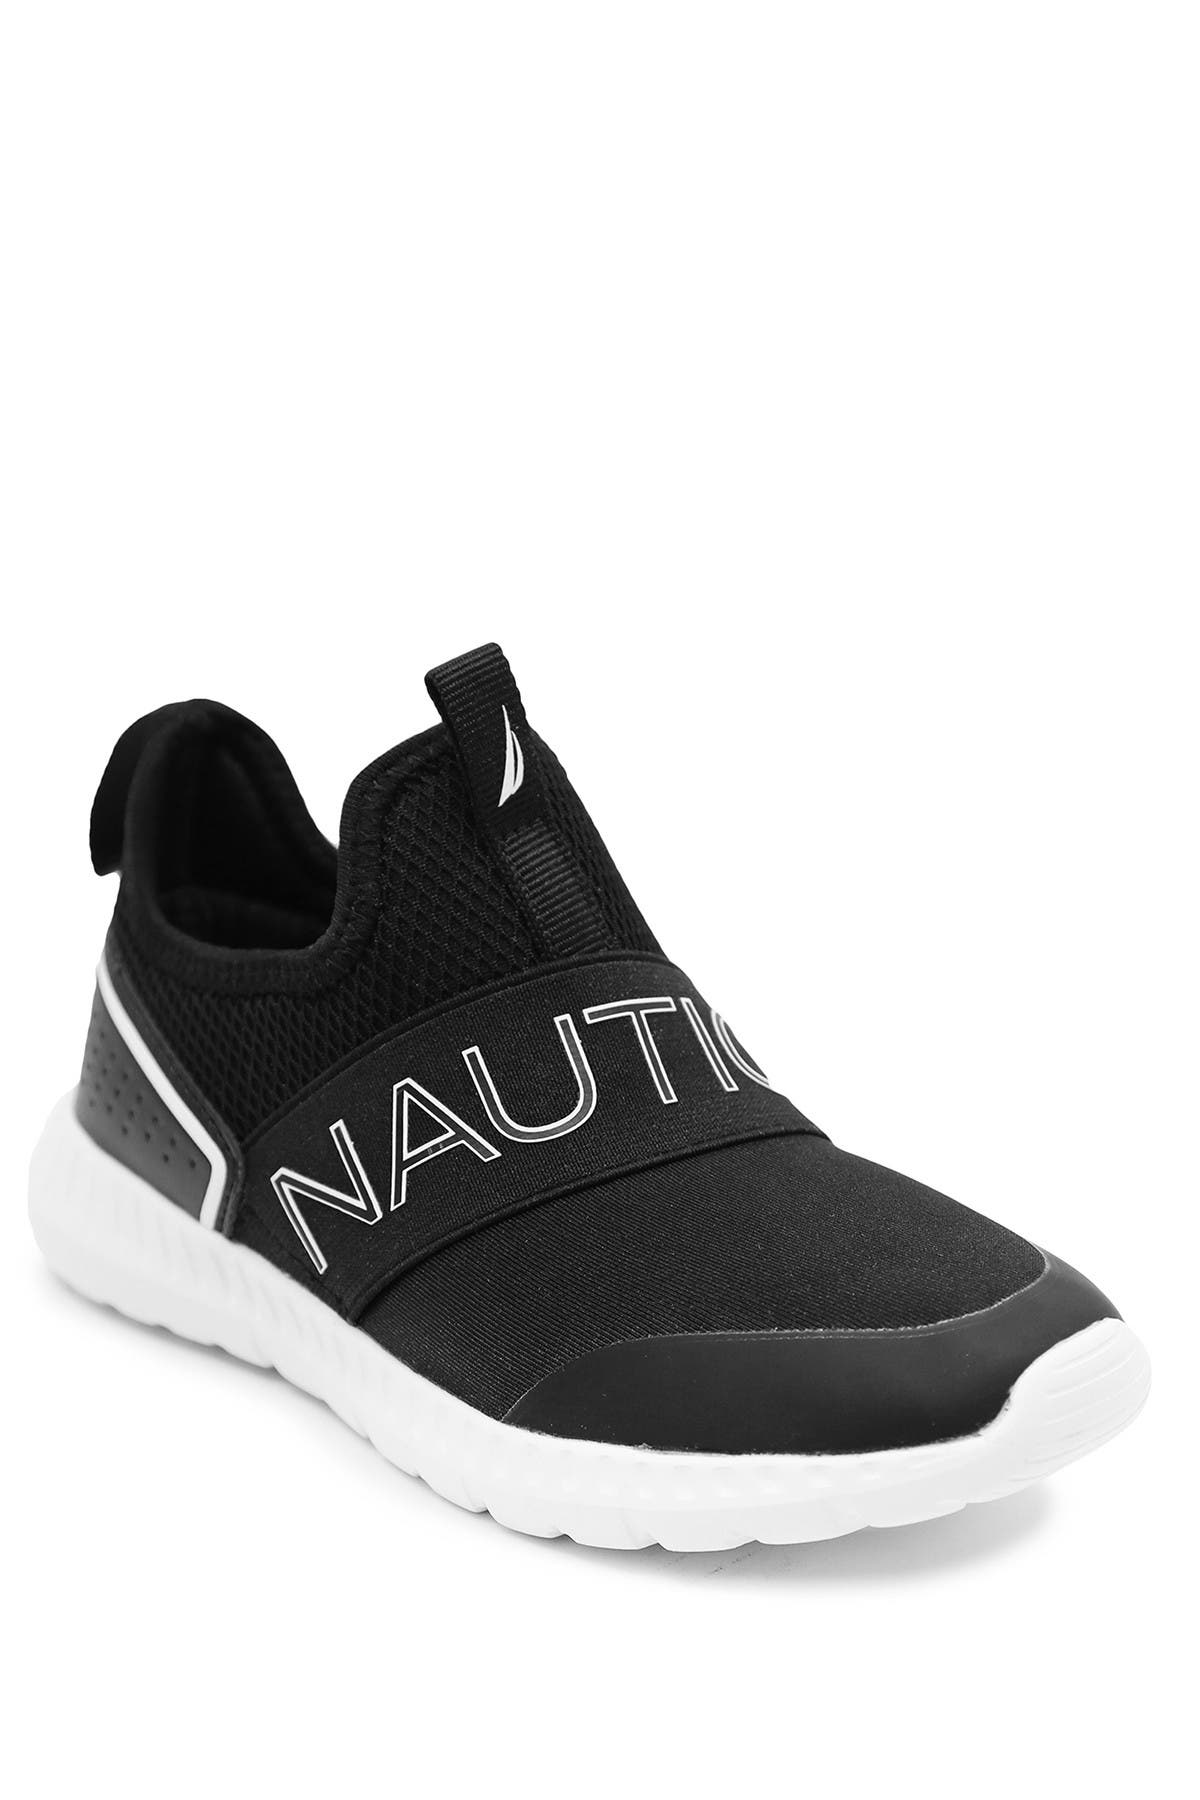 nautica shoes